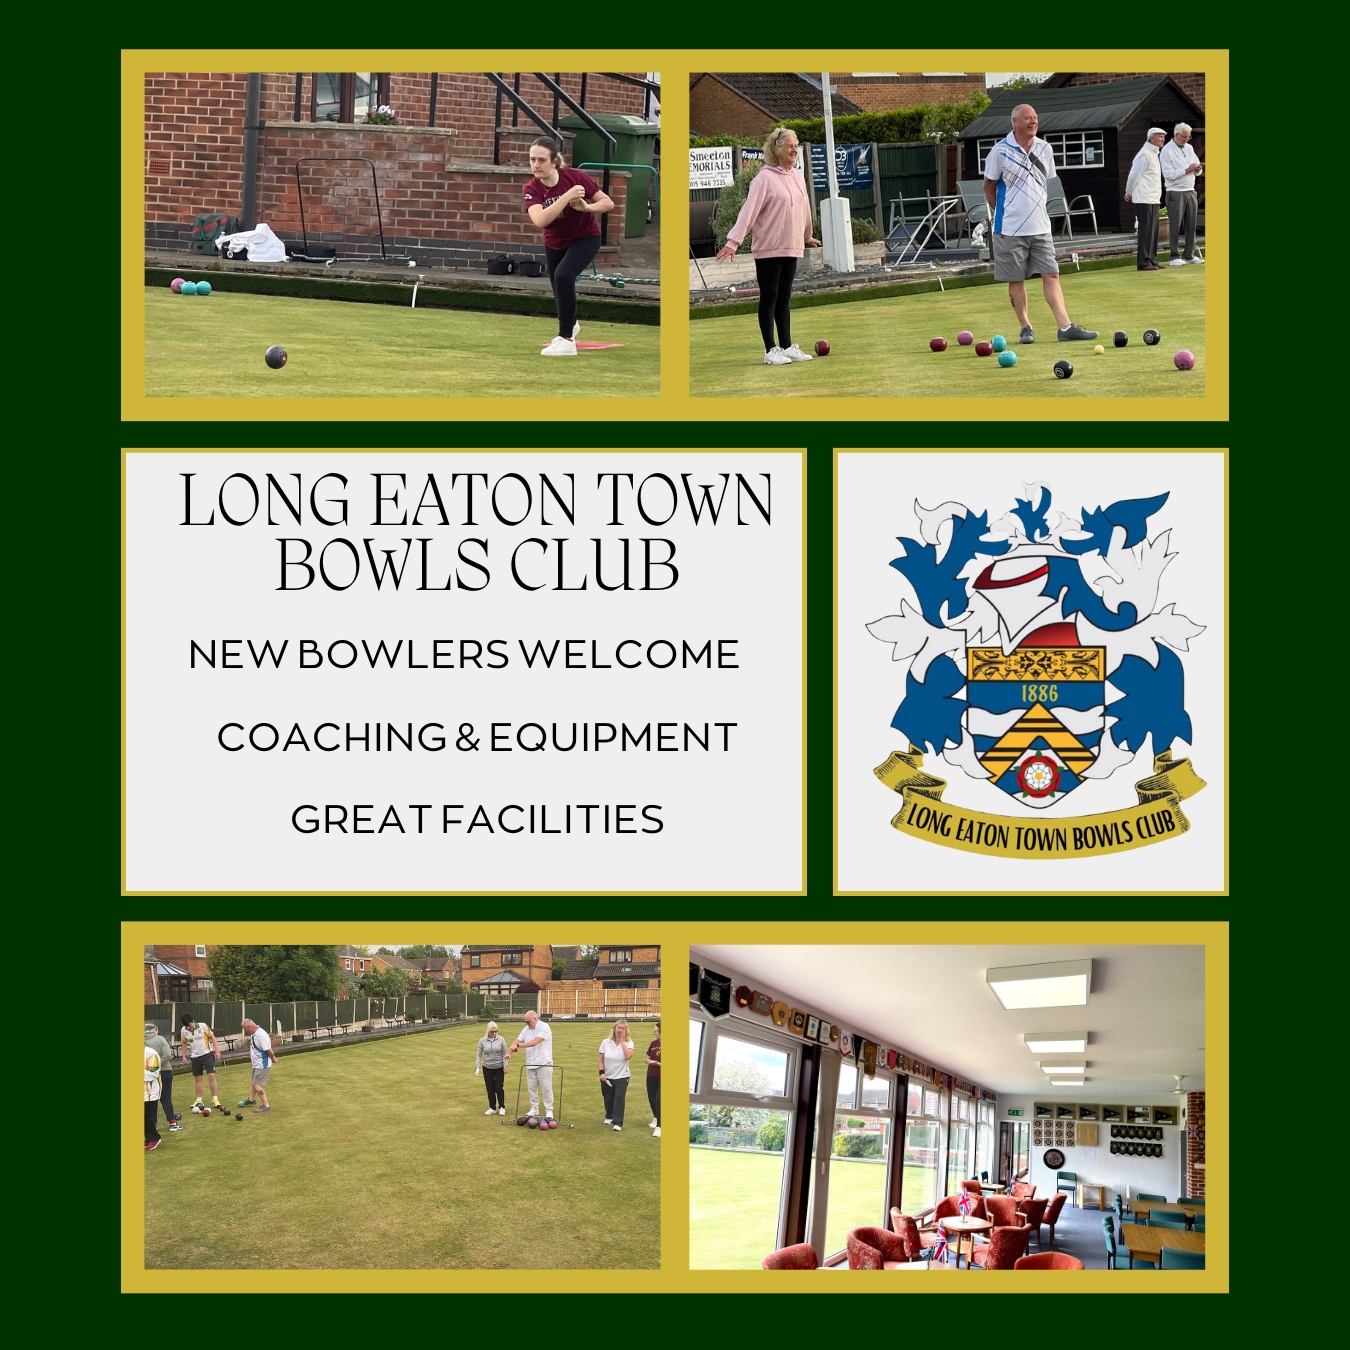 Long Eaton Town Bowls Club New Bowlers